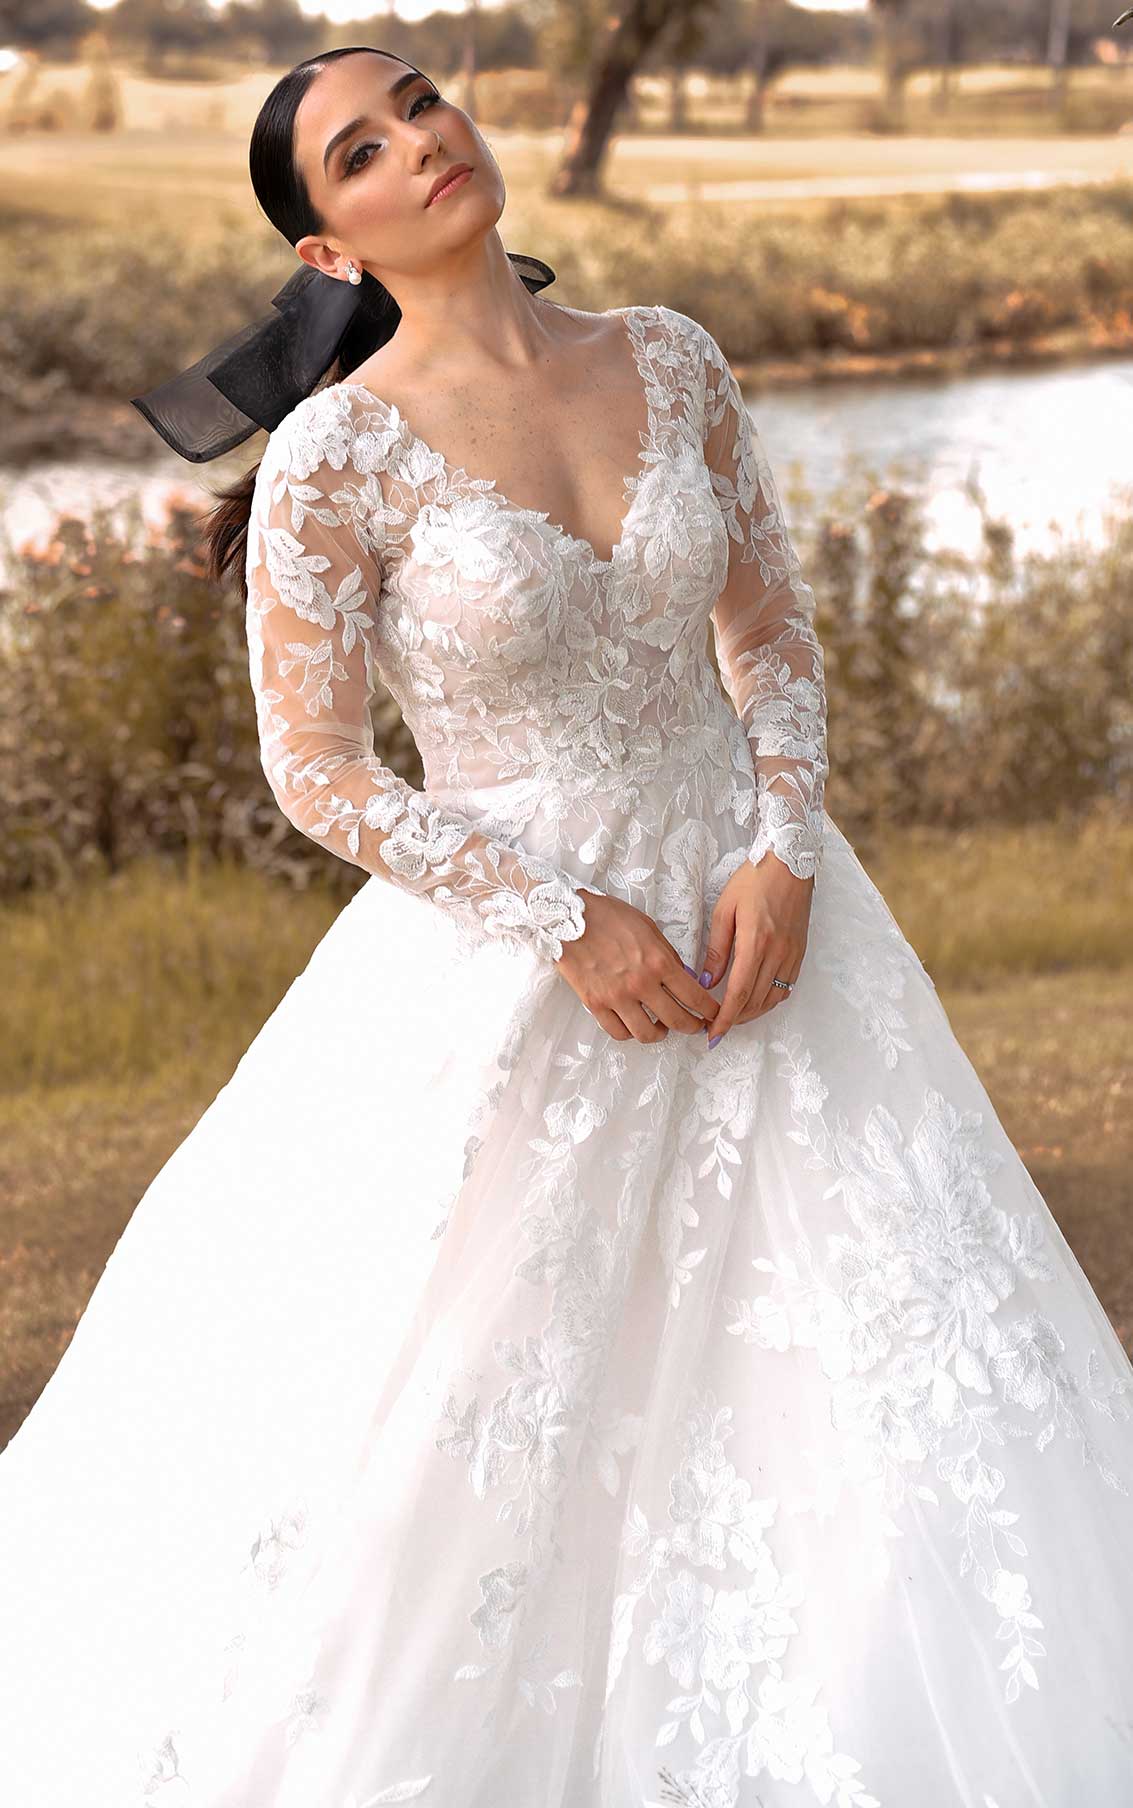 Long-sleeved a-line wedding dress